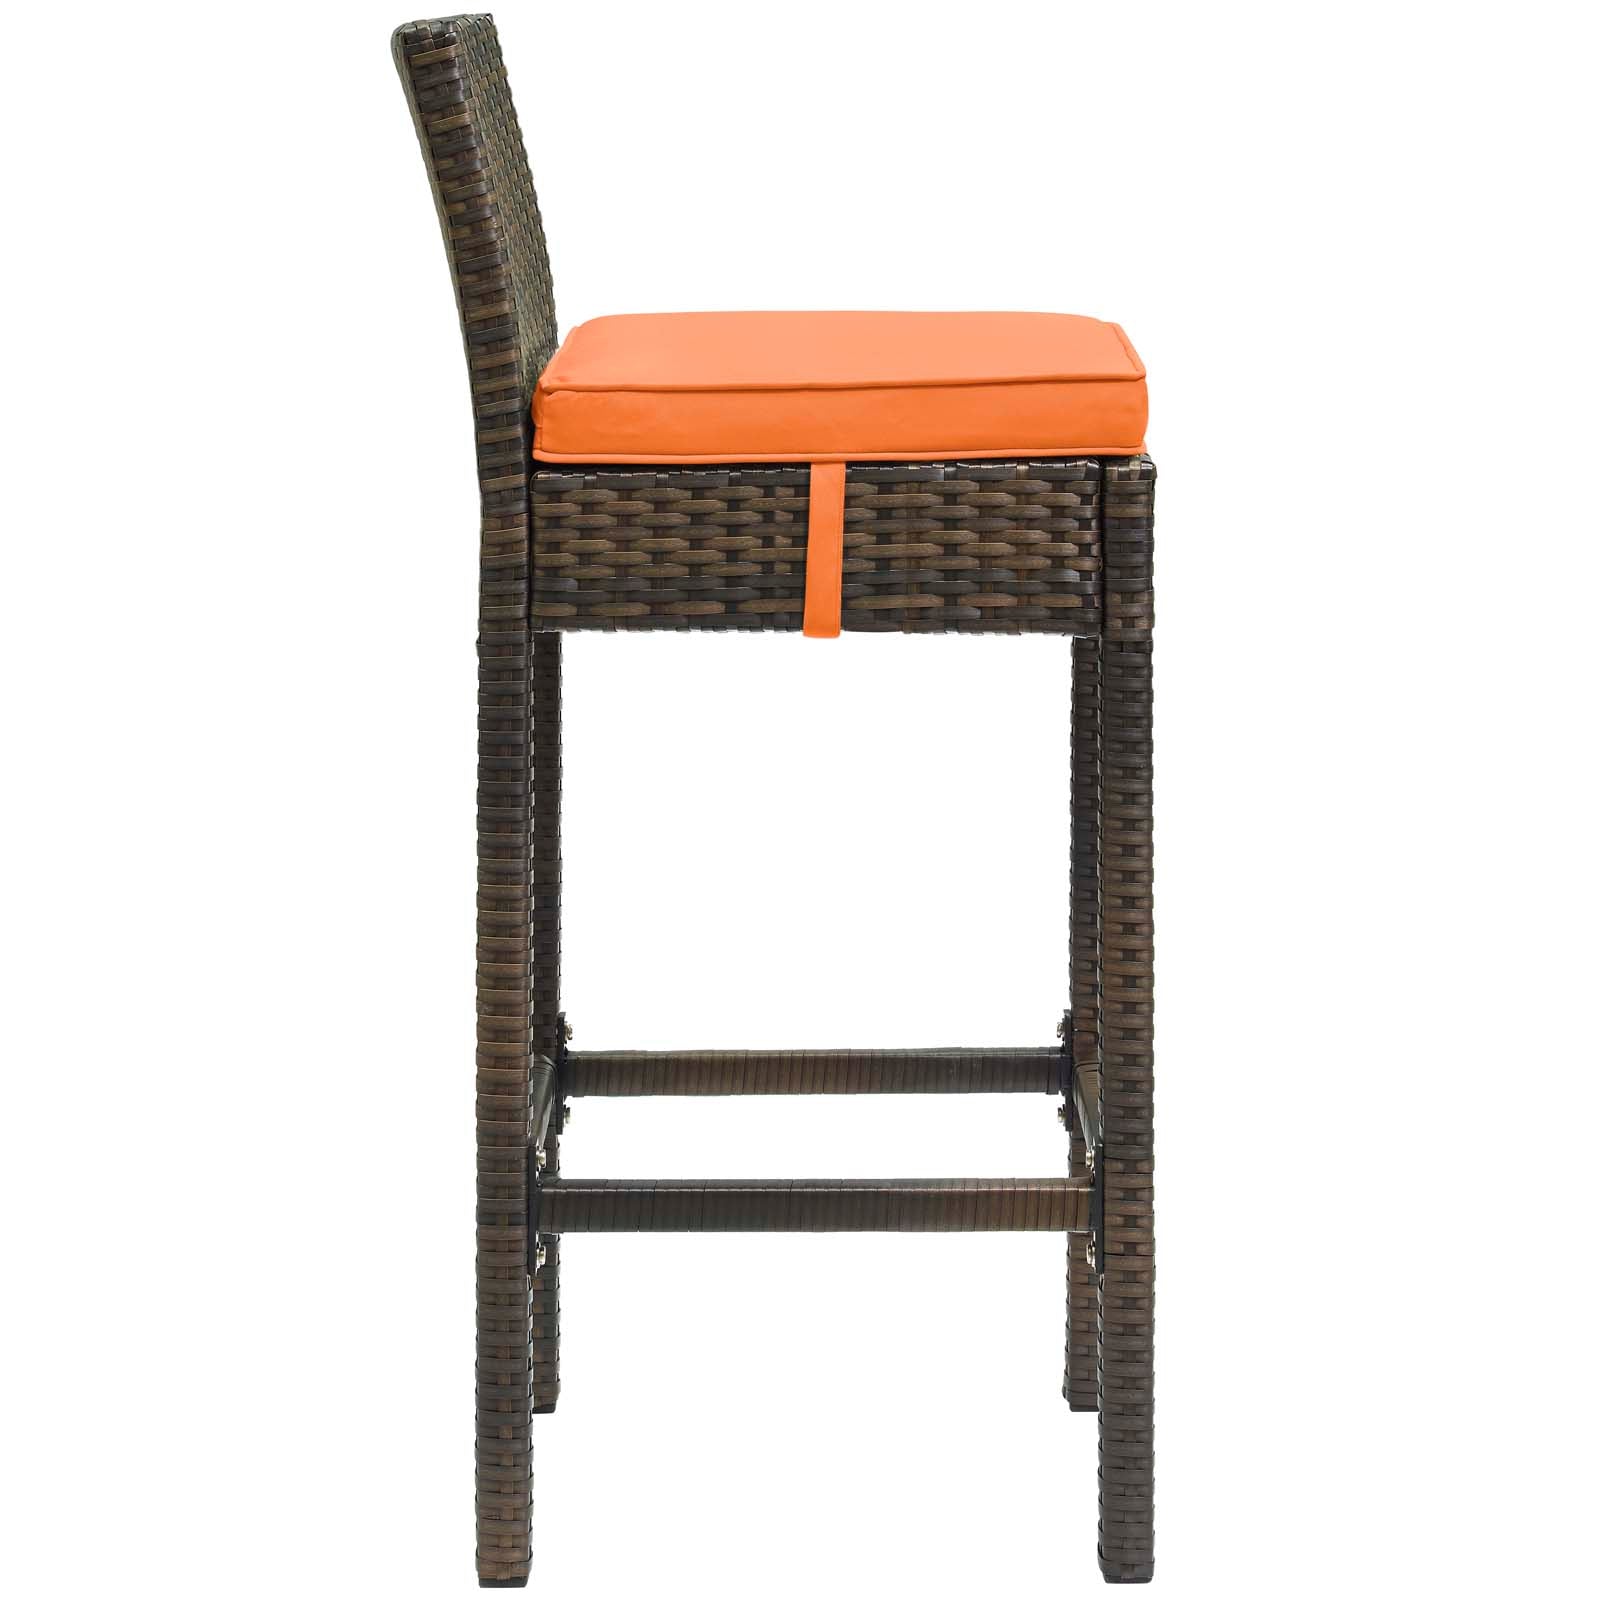 Modway Outdoor Barstools - Conduit Bar Stool Outdoor Patio Wicker Rattan Set of 2 Brown Orange